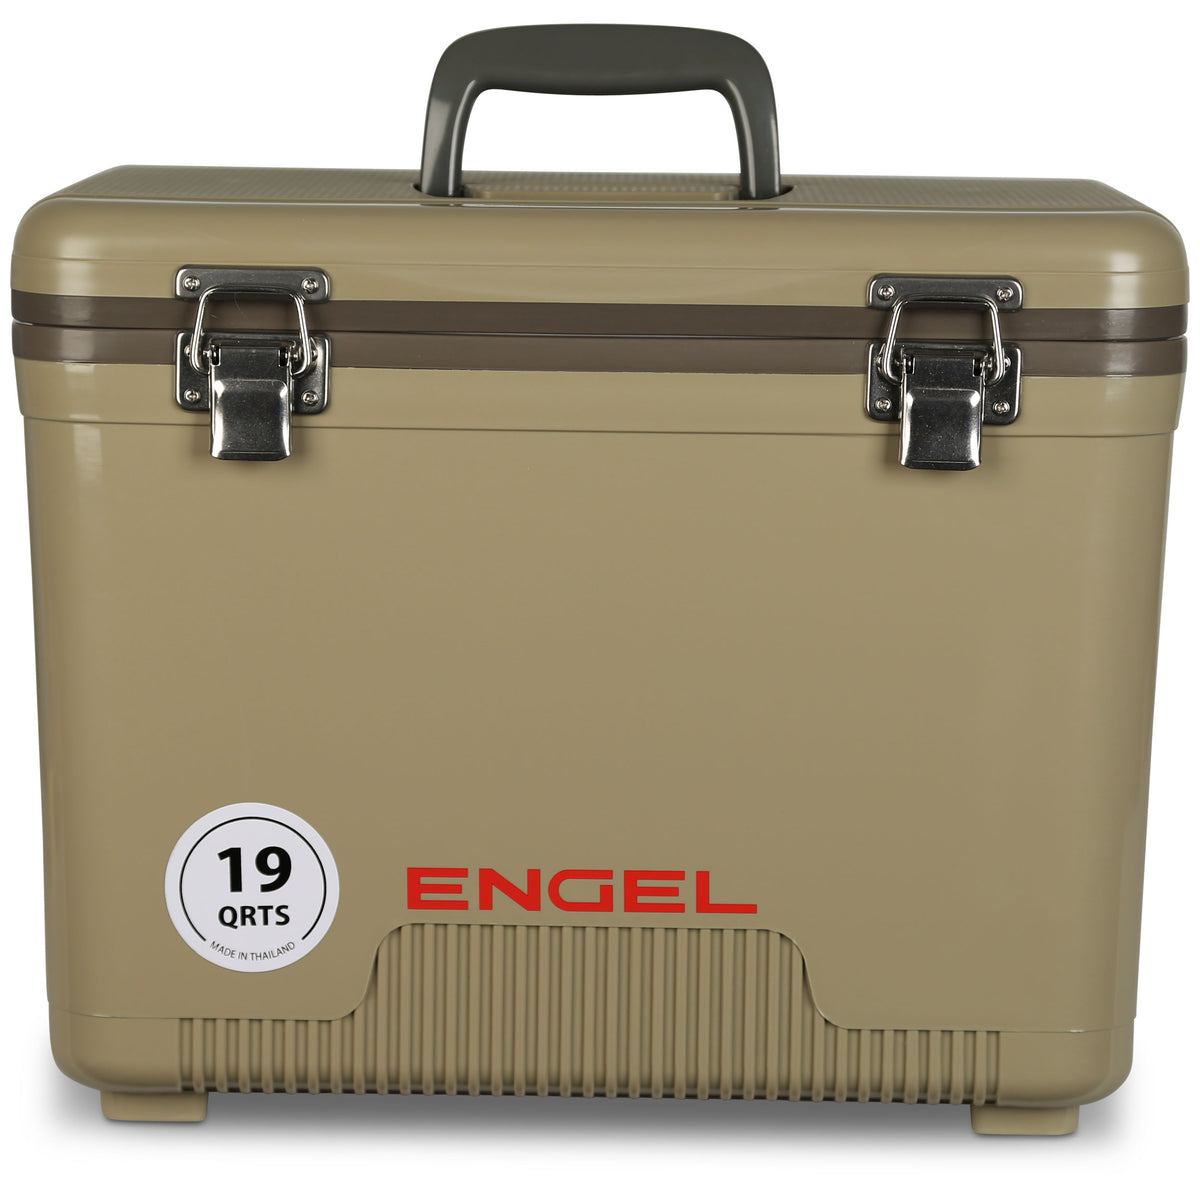 Engel 19 Quart Drybox/Cooler - Tan